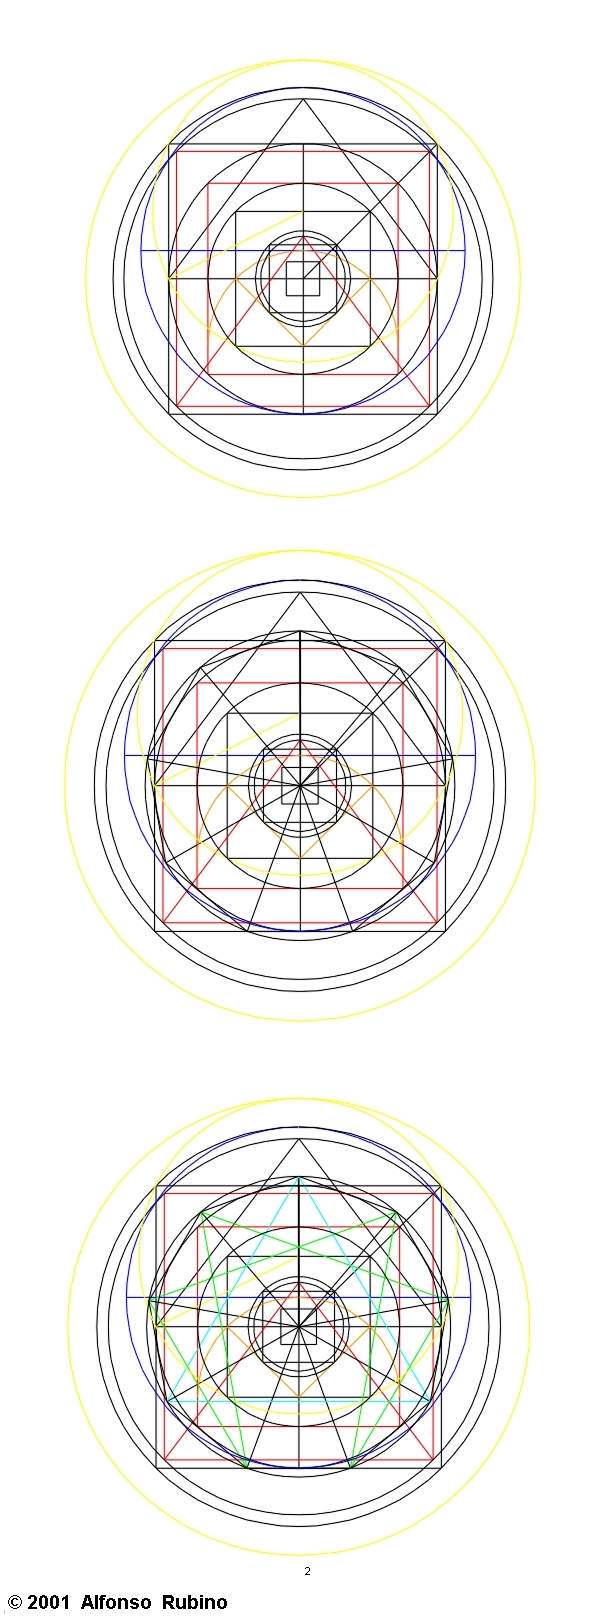 Geometric Analysis of the Aztec Sundial - Part 2 by Alfonso Rubino